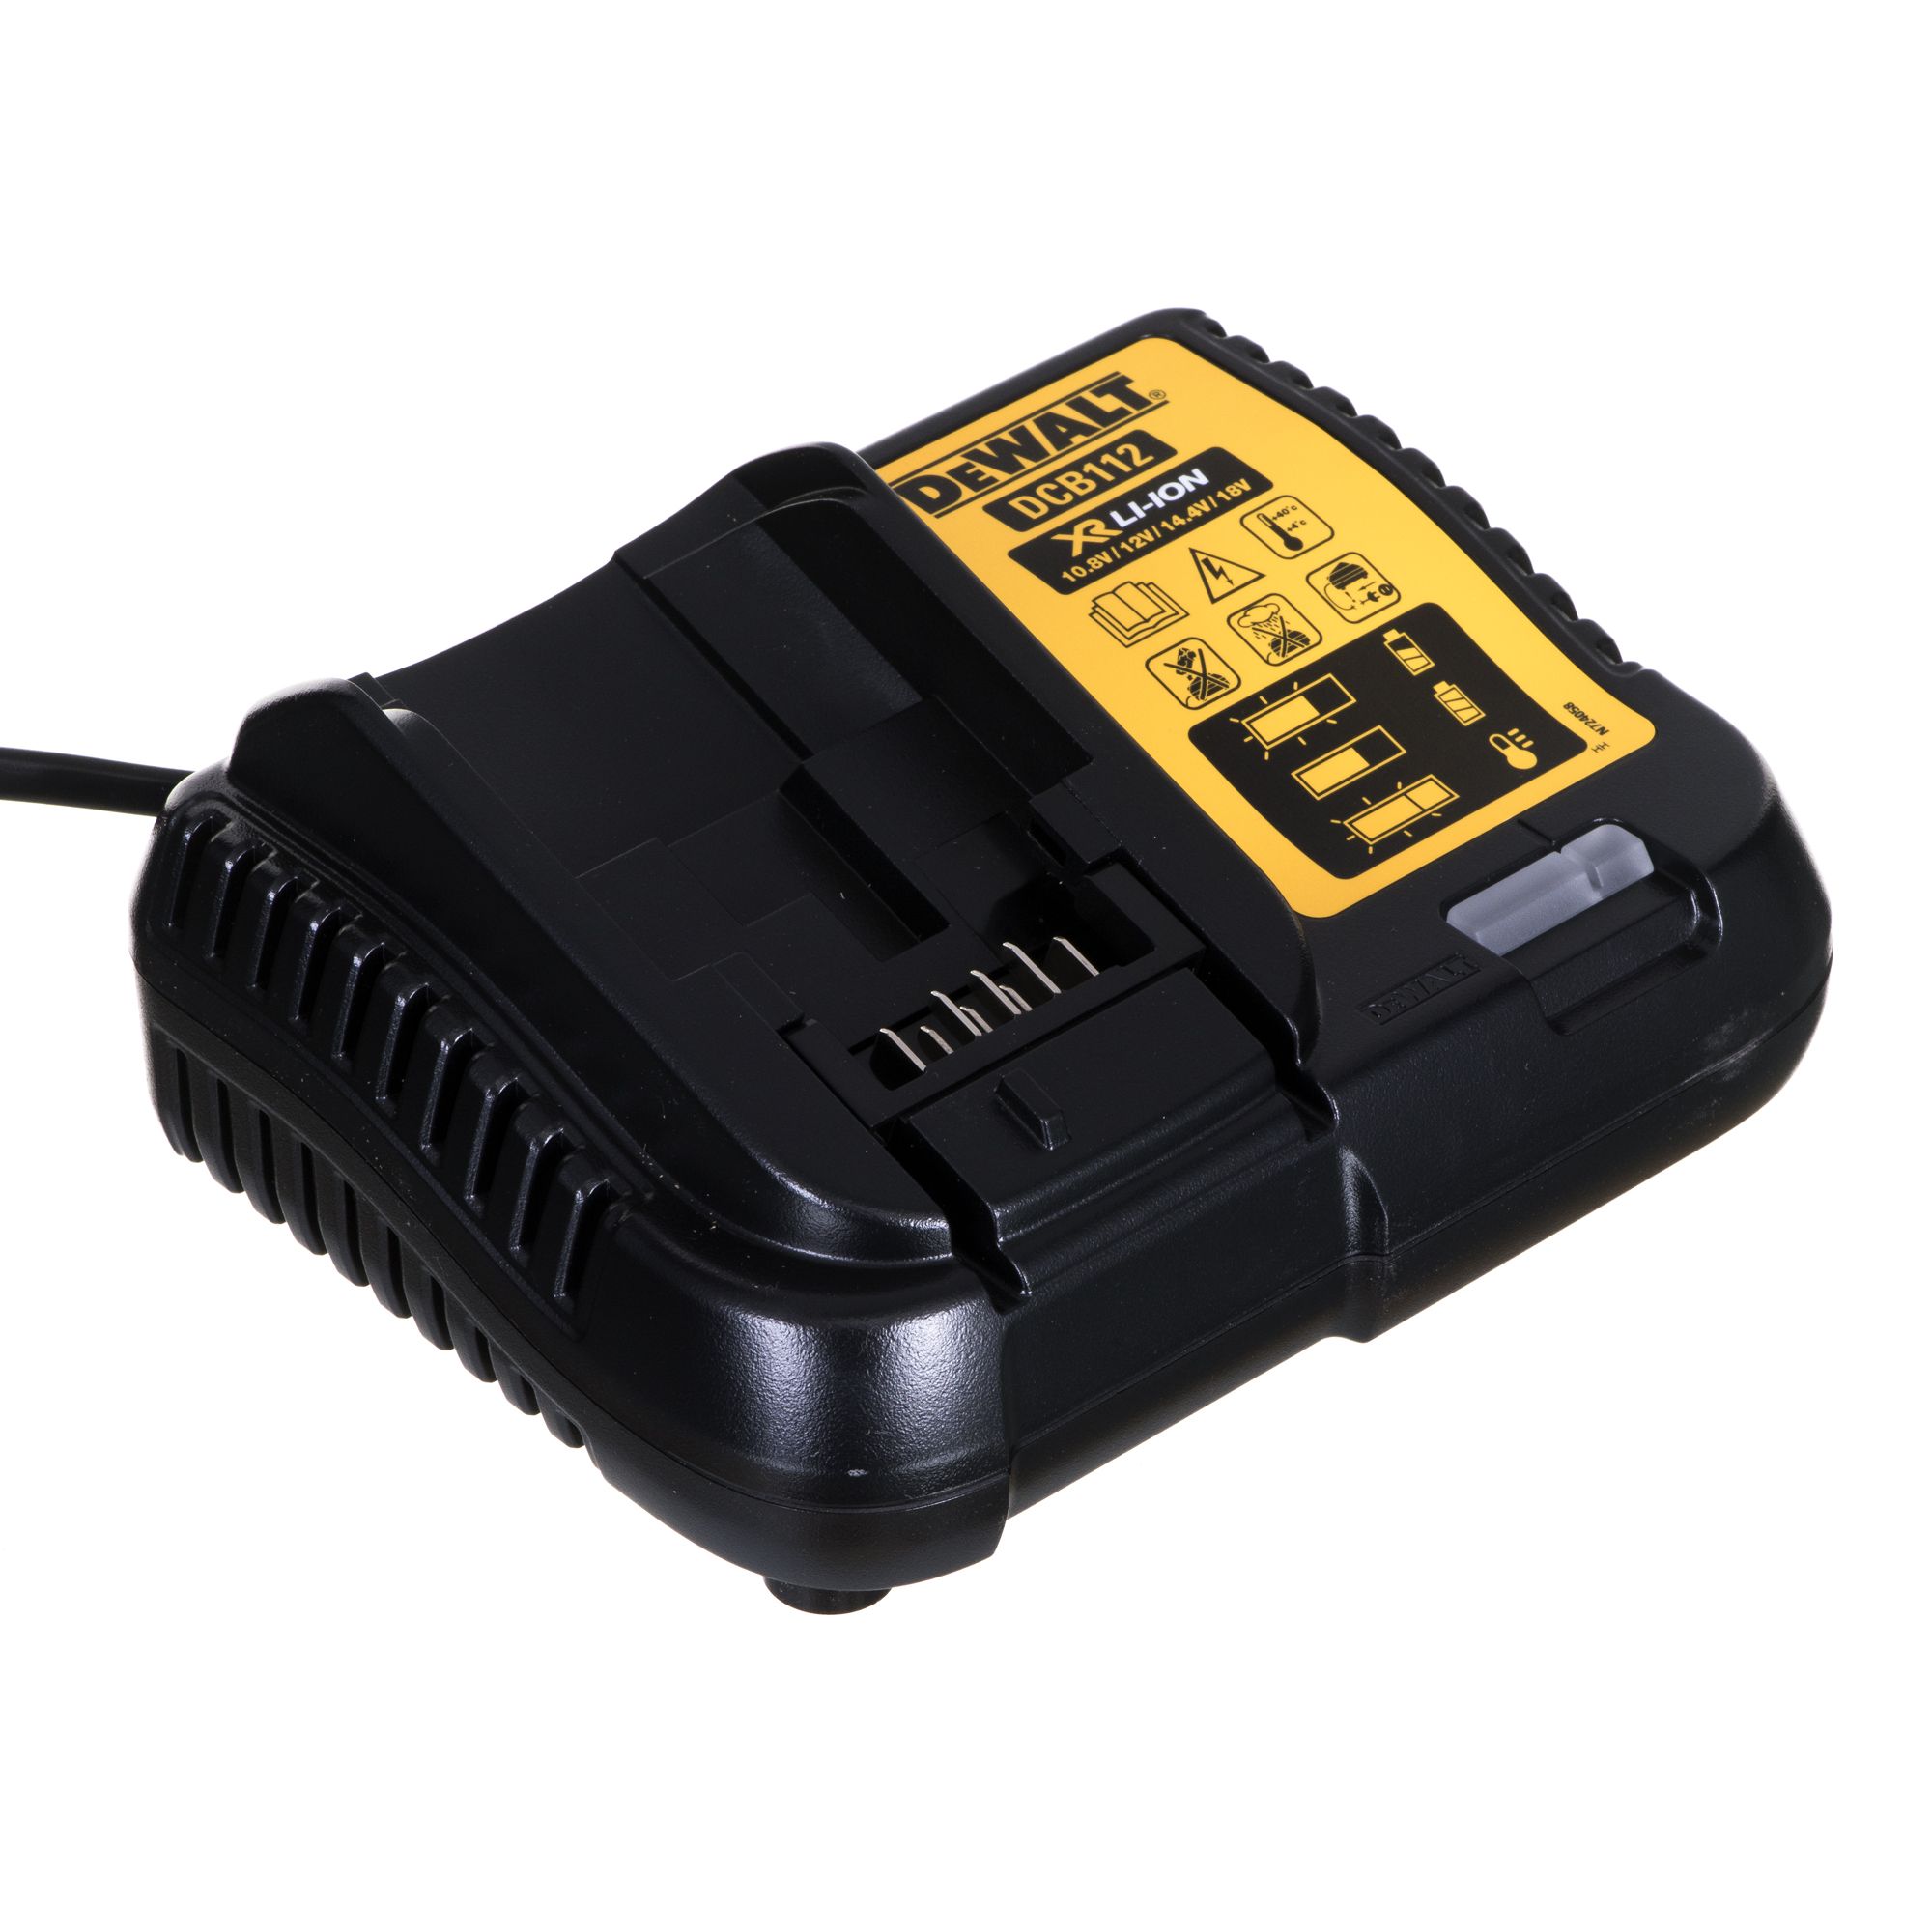 DeWALT DCD708D2T-QW power screwdriver/impact driver Black,Yellow 1650 RPM_8